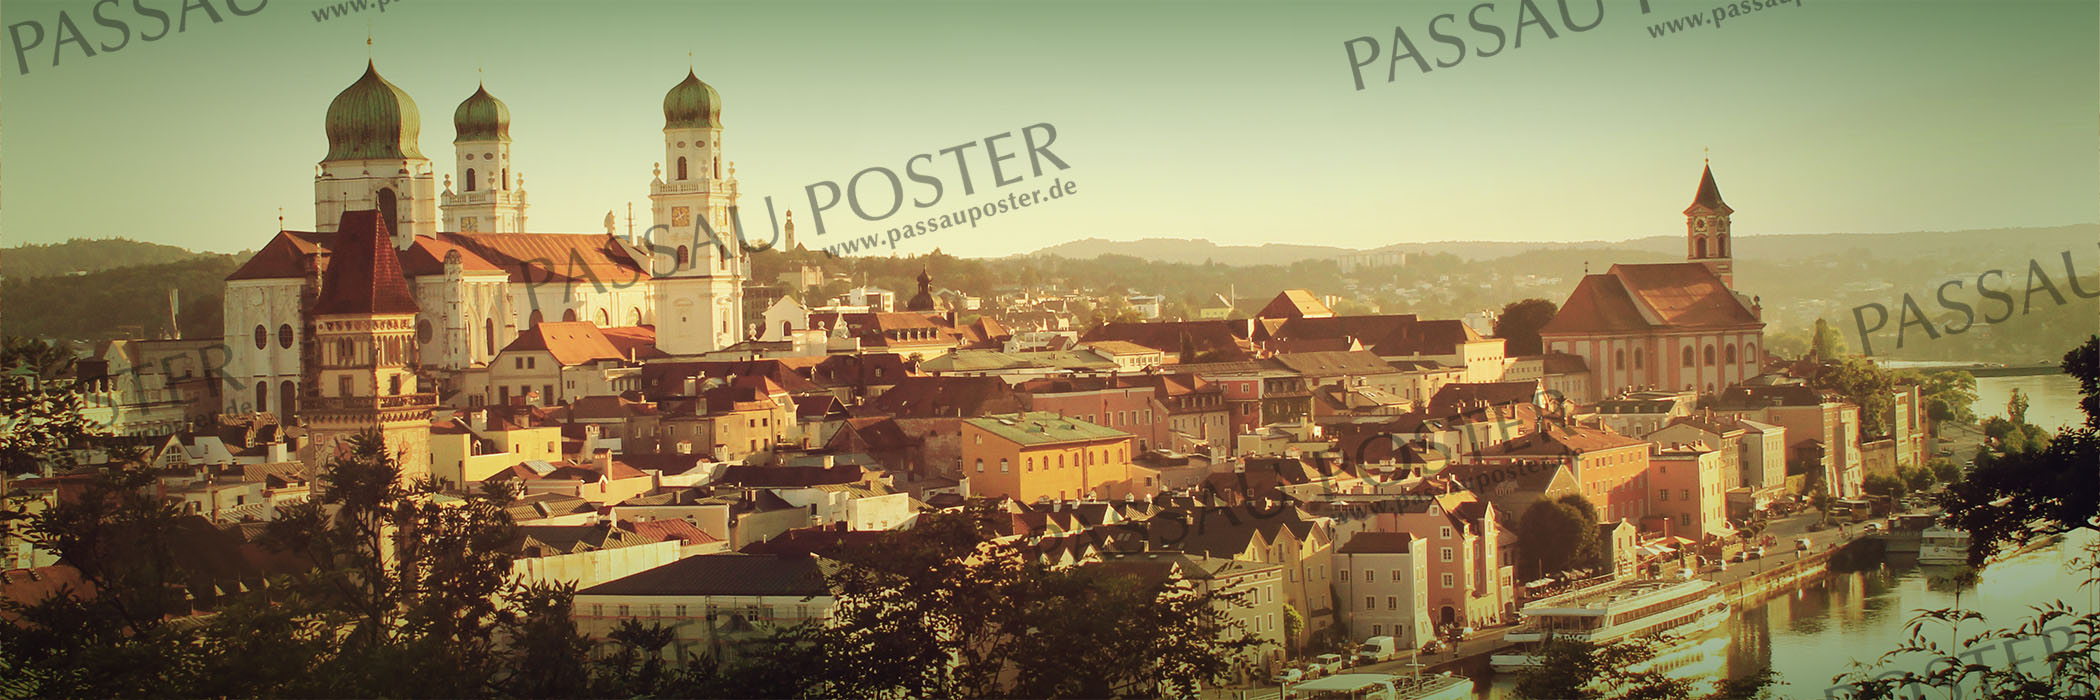 Passau Poster - Goldenes Passau